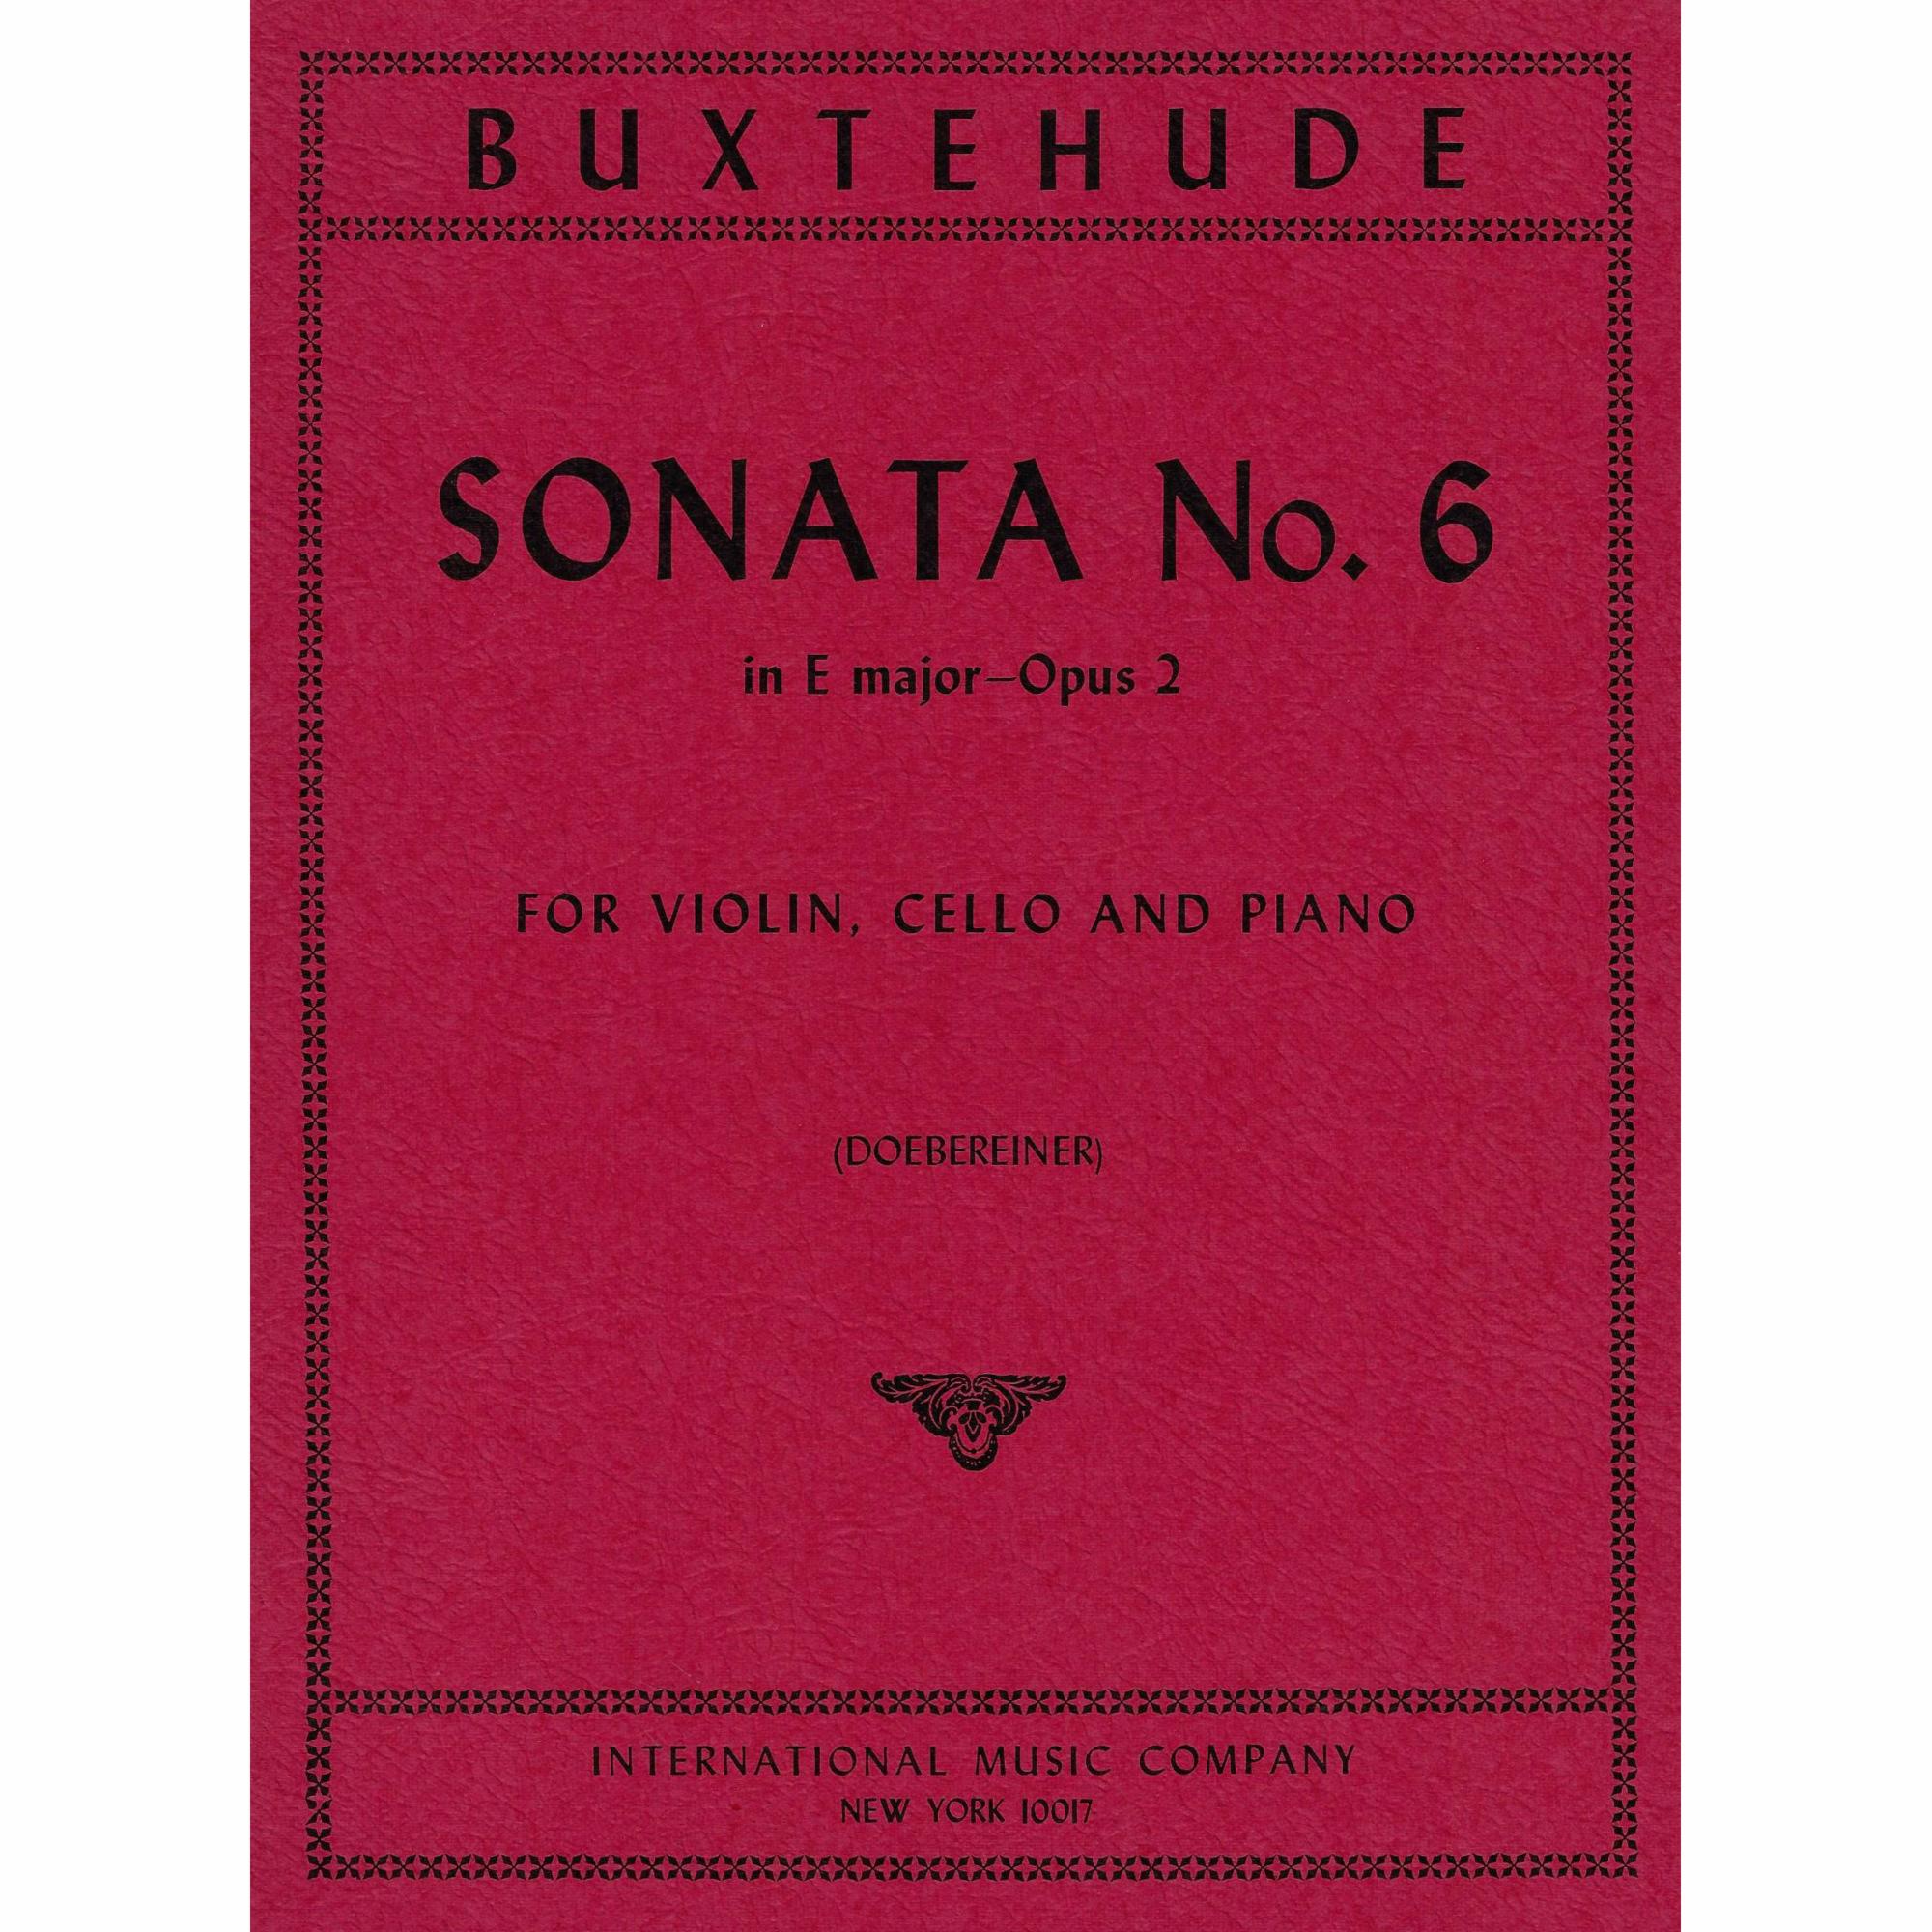 Buxtehude -- Sonata No. 6 in E Major, Op. 2 for Piano Trio